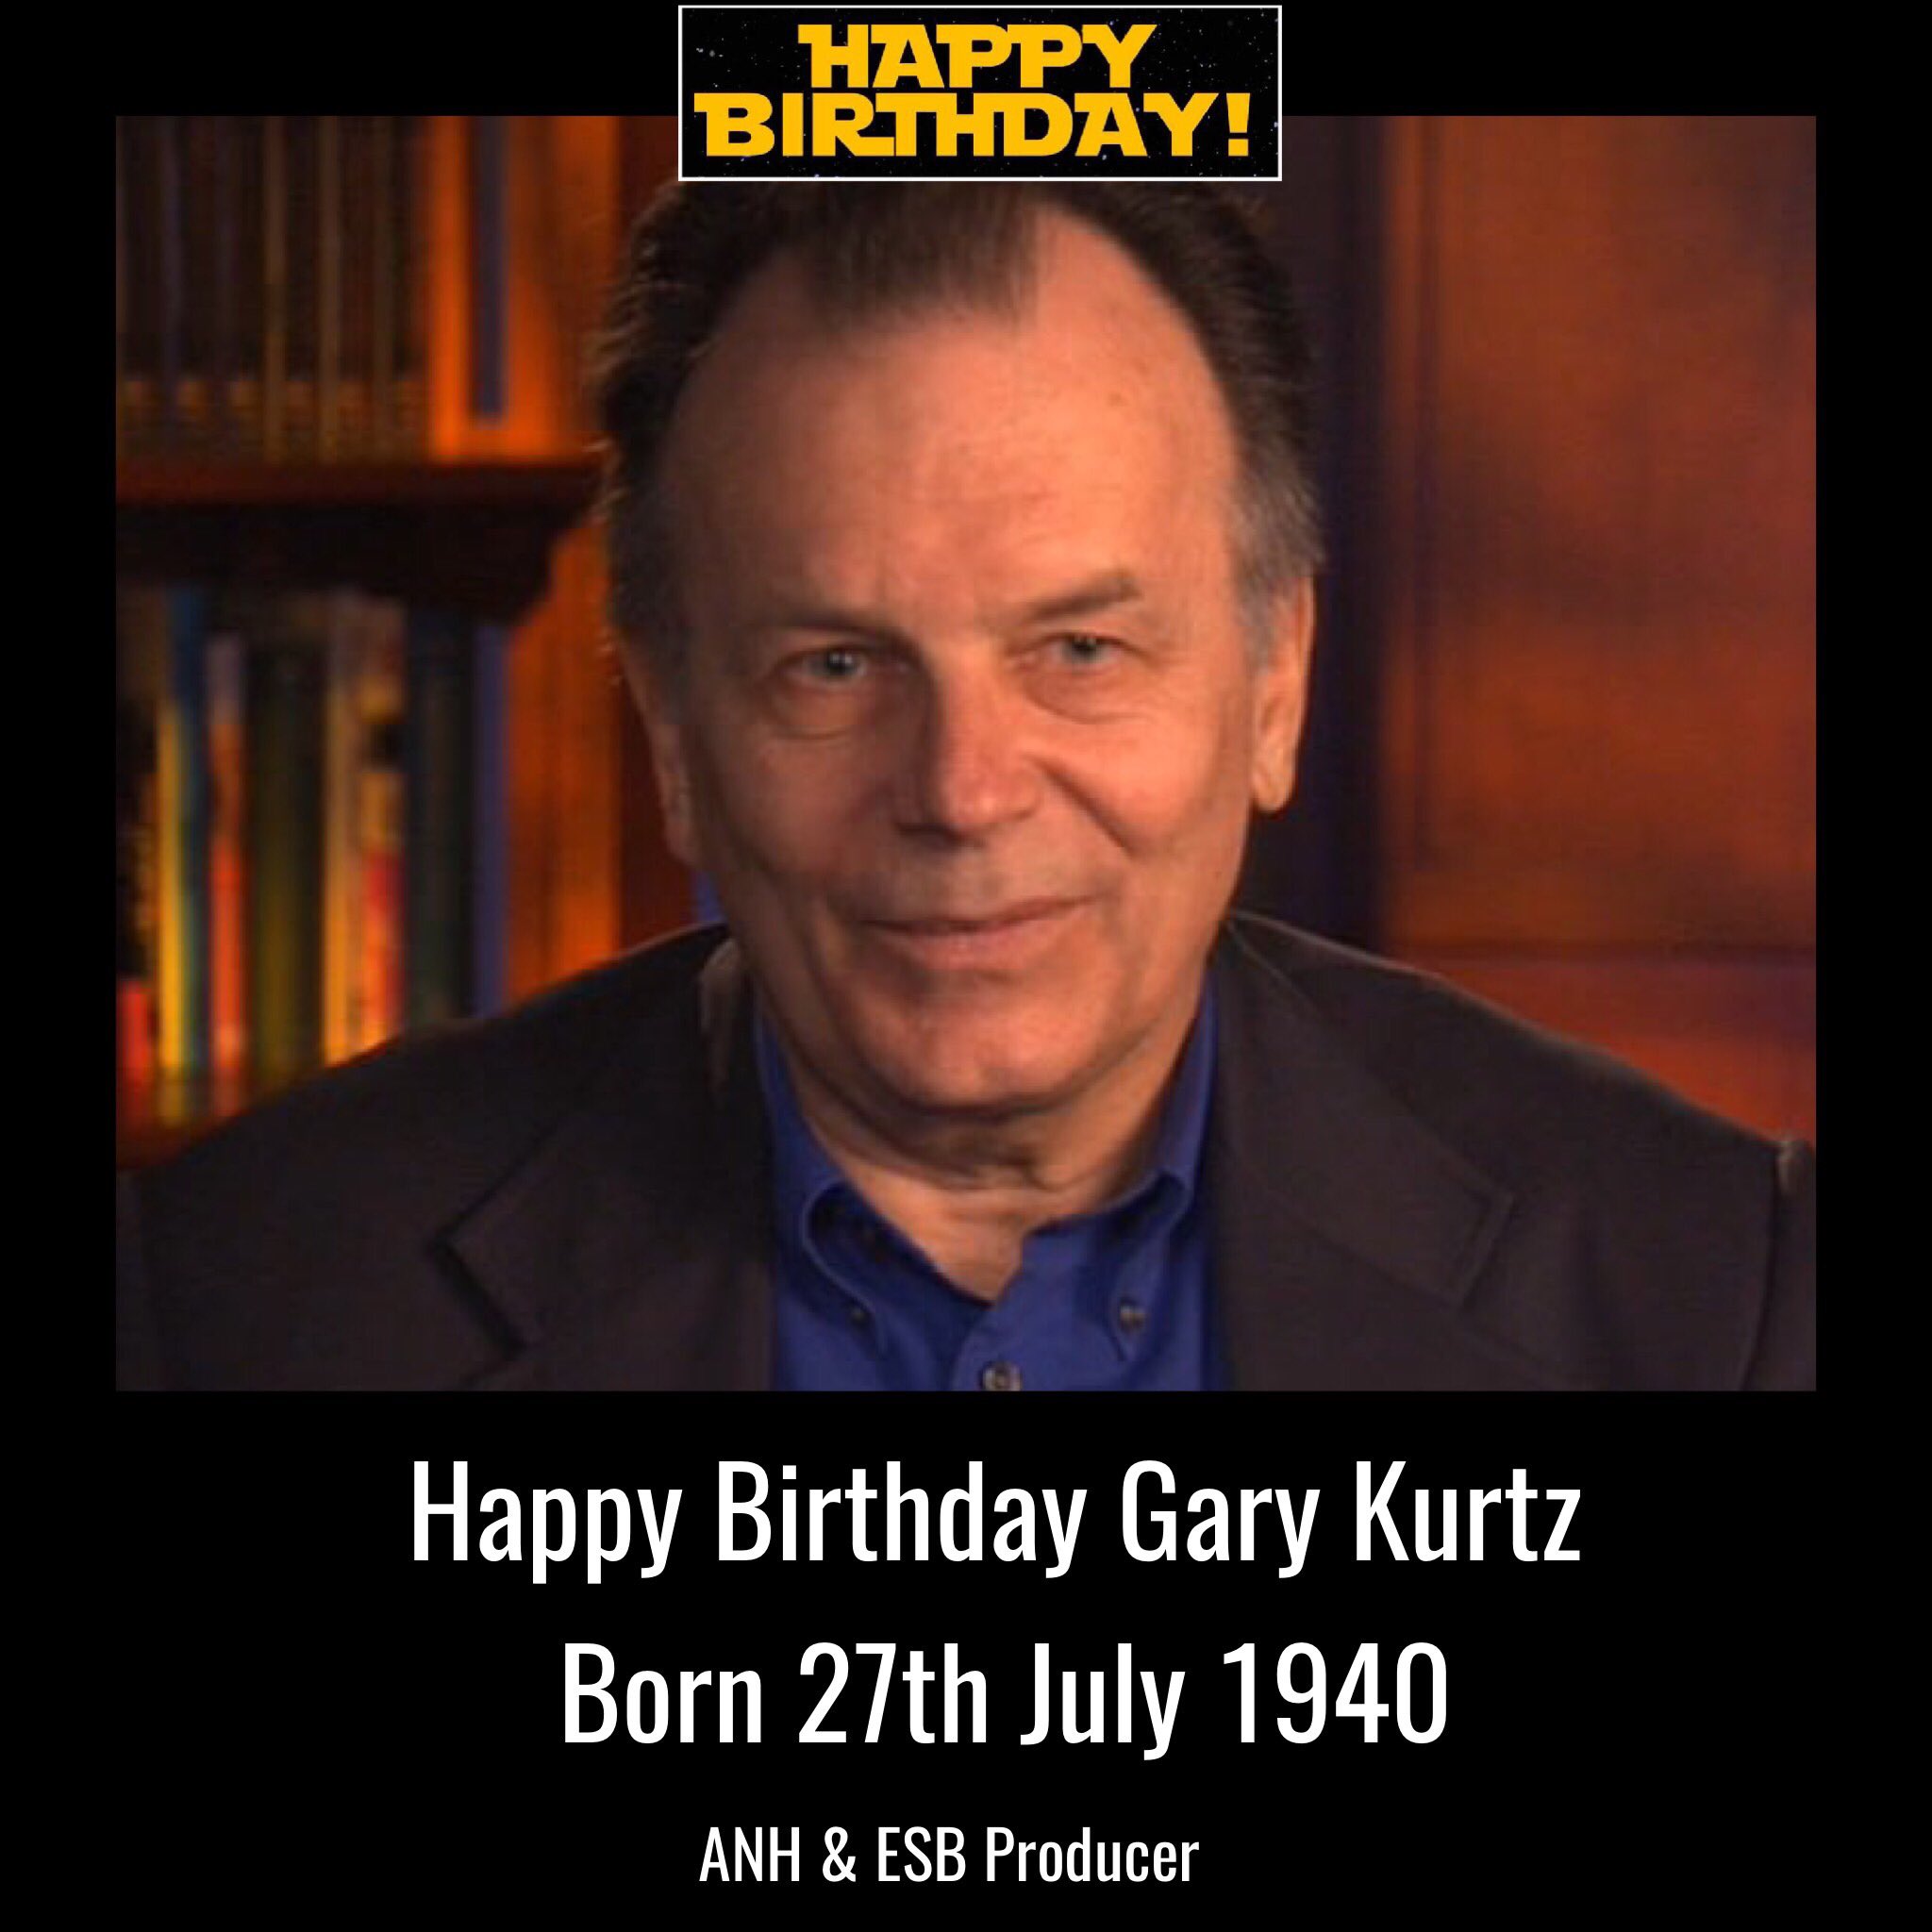 Happy Birthday Gary Kurtz, Star Wars producer. Born 27th July 1940.  